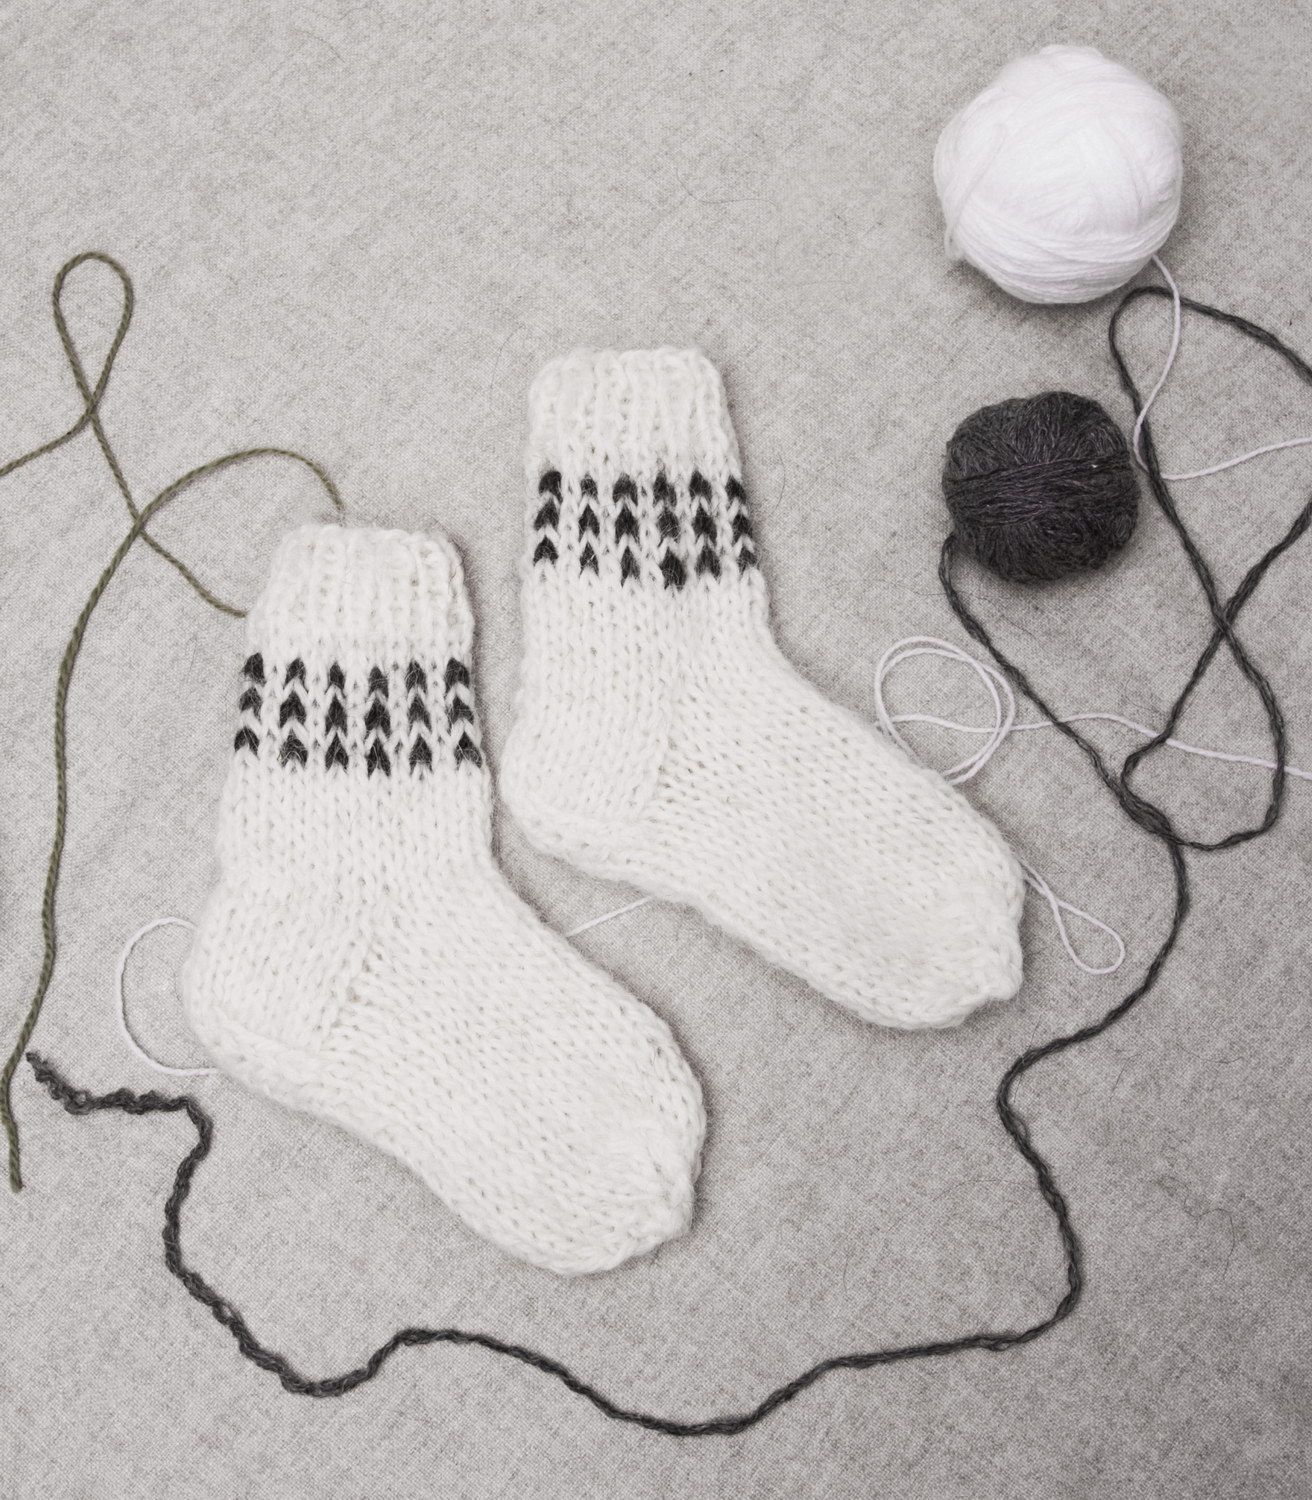 Woolen children's socks photo 2